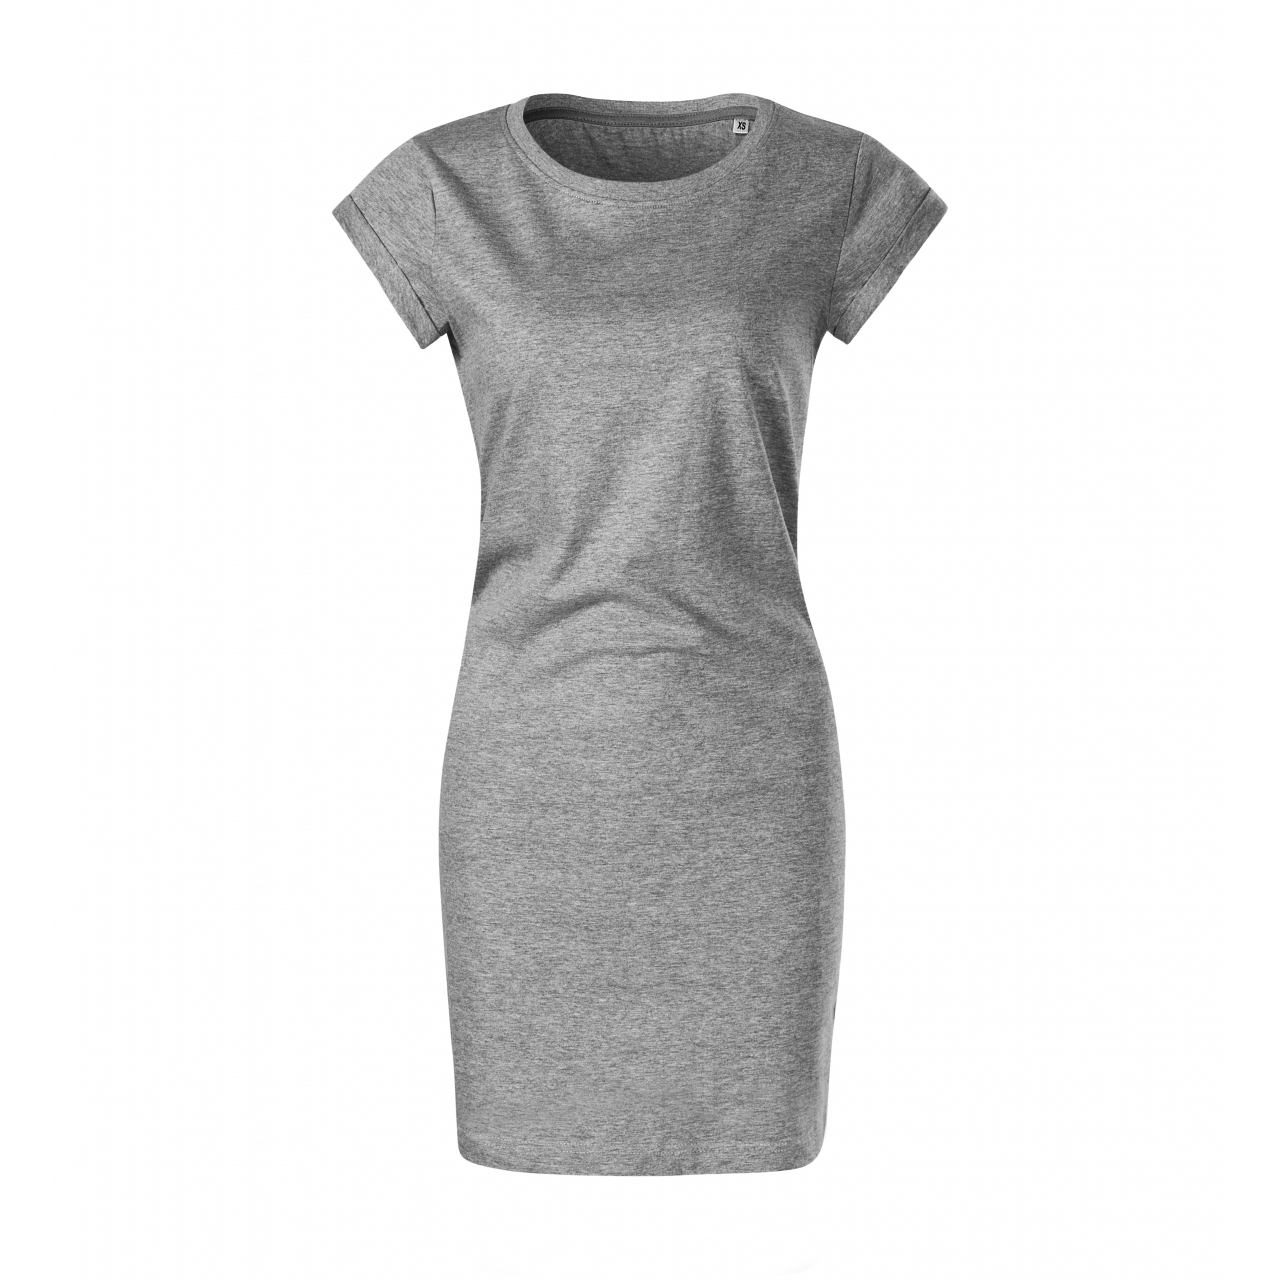 Šaty dámské Malfini Freedom - šedé, M